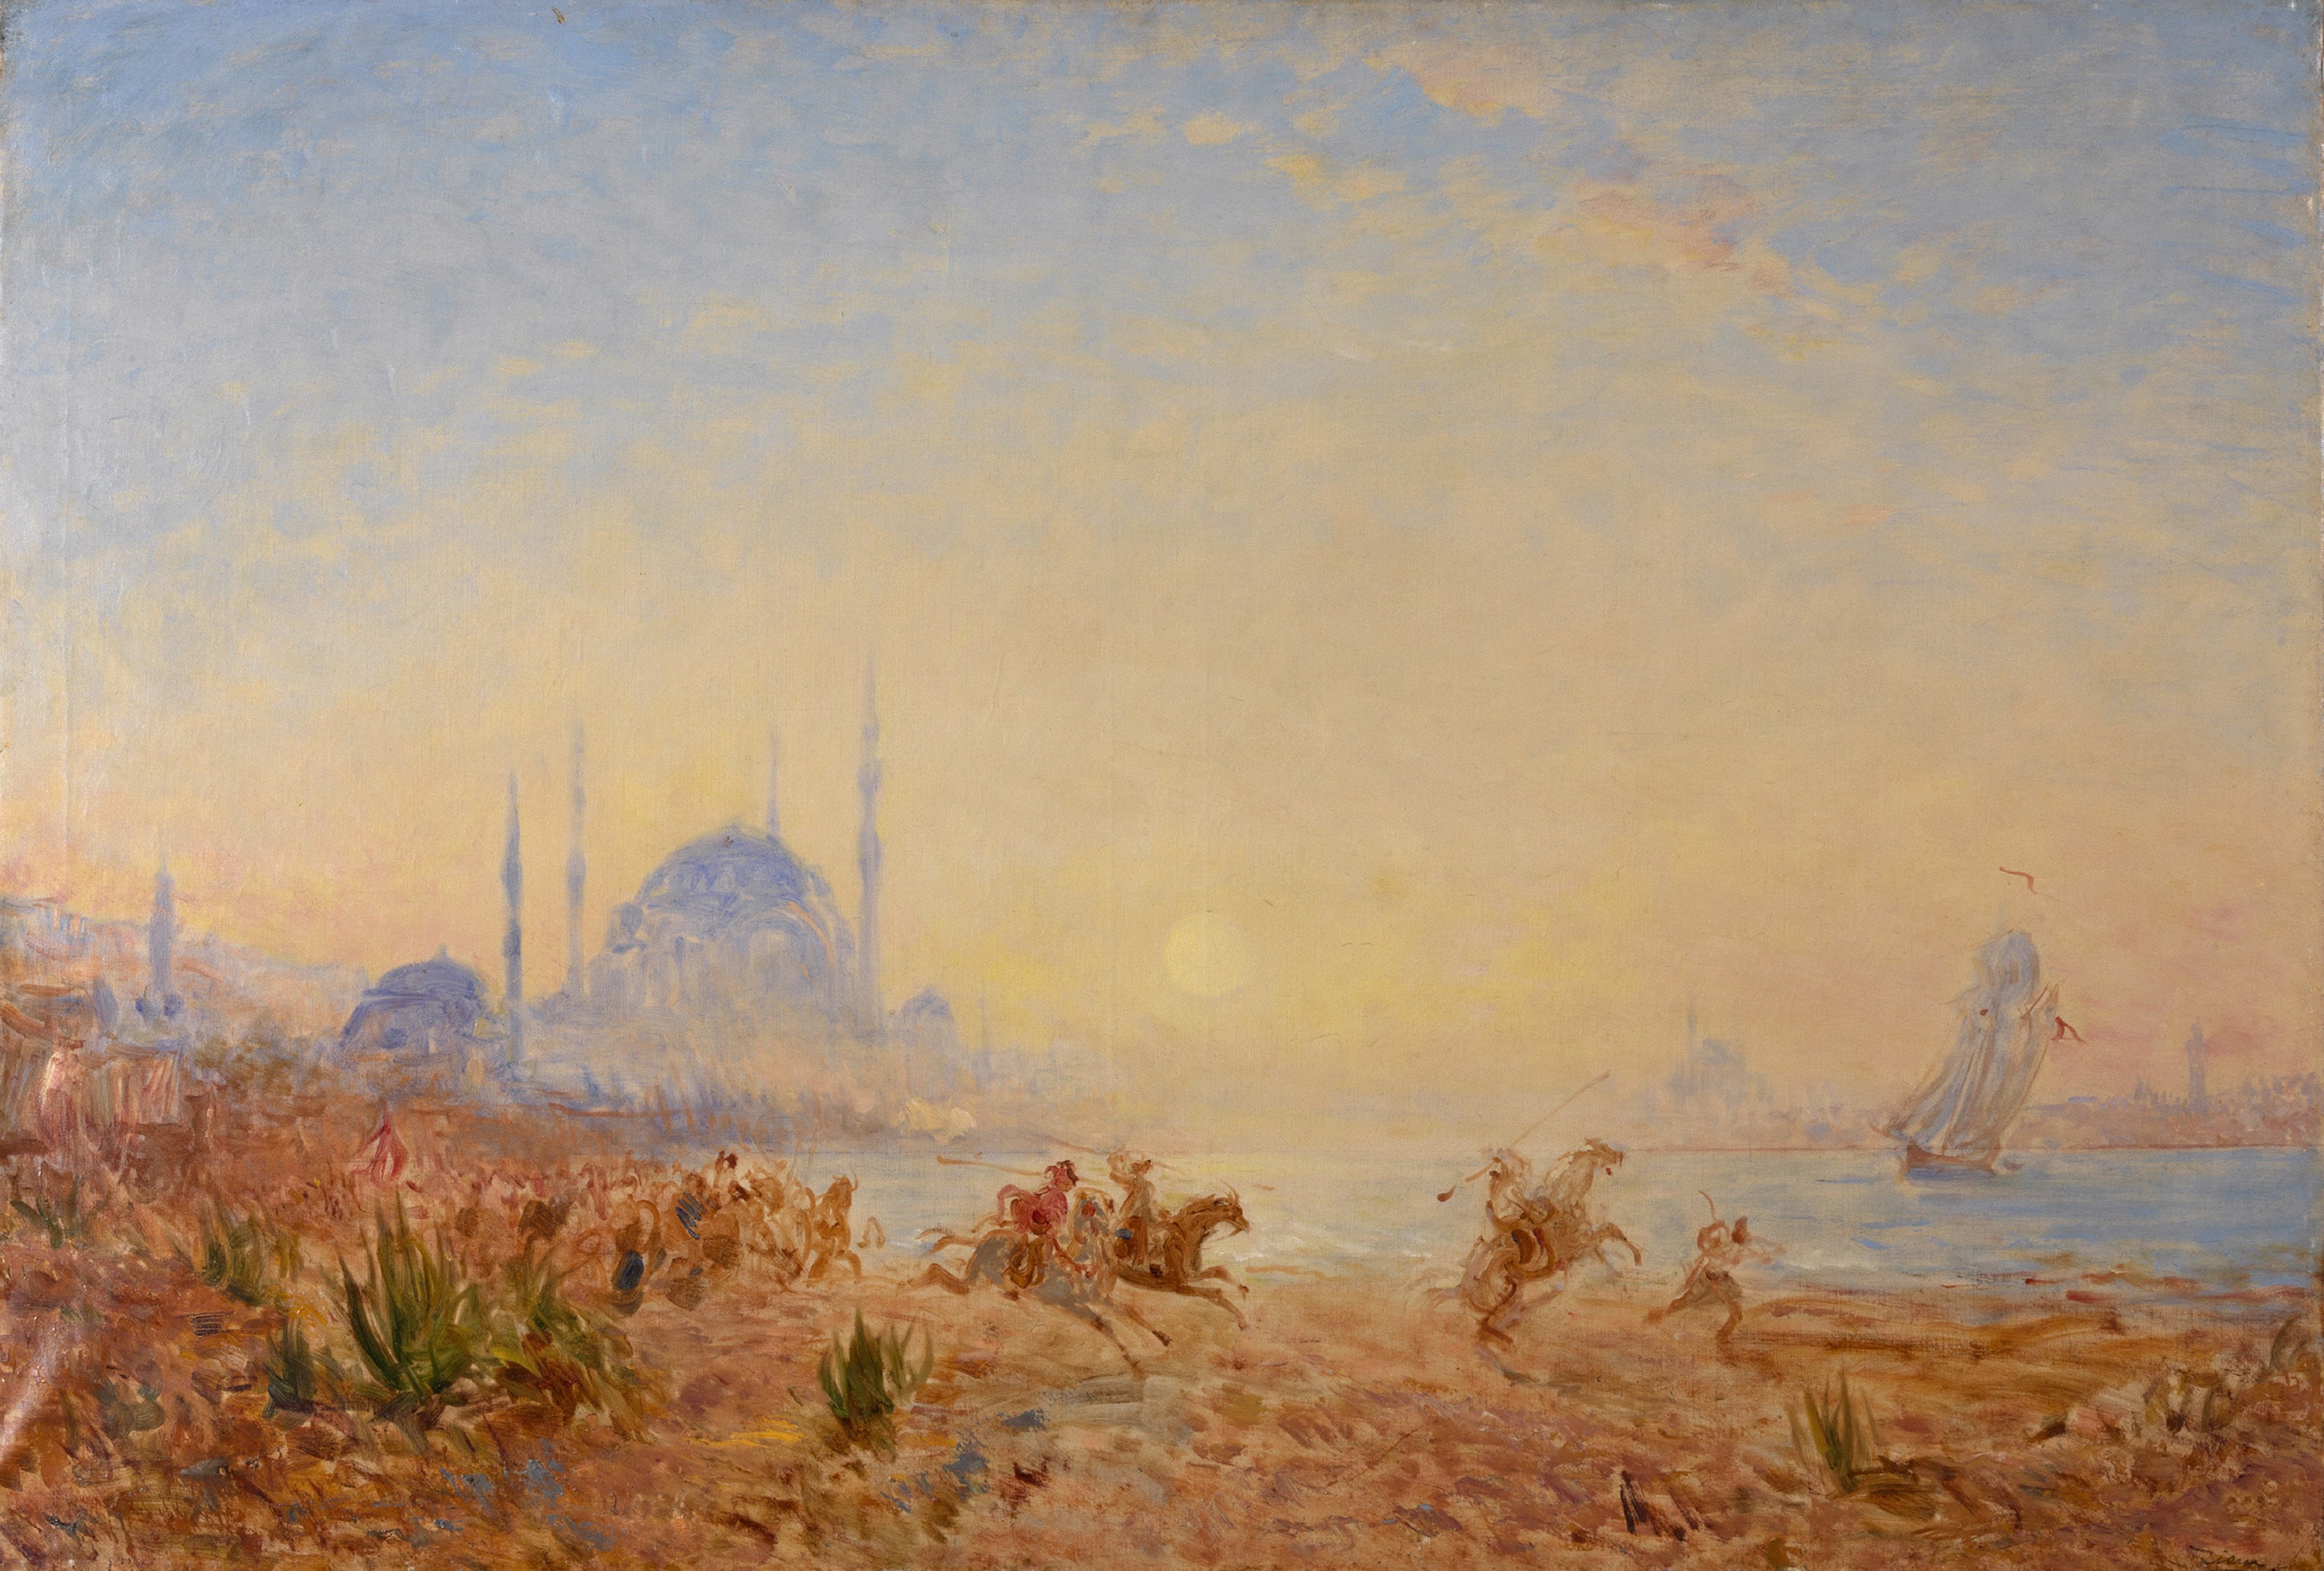 İstanbul, Fantezi, 1880 -1890, Tuval &amp;amp;amp;amp;amp;amp;amp;uuml;zerine yağlıboya, 83 x 120 cm., Ziem M&amp;amp;amp;amp;amp;amp;amp;uuml;zesi Koleksiyonu